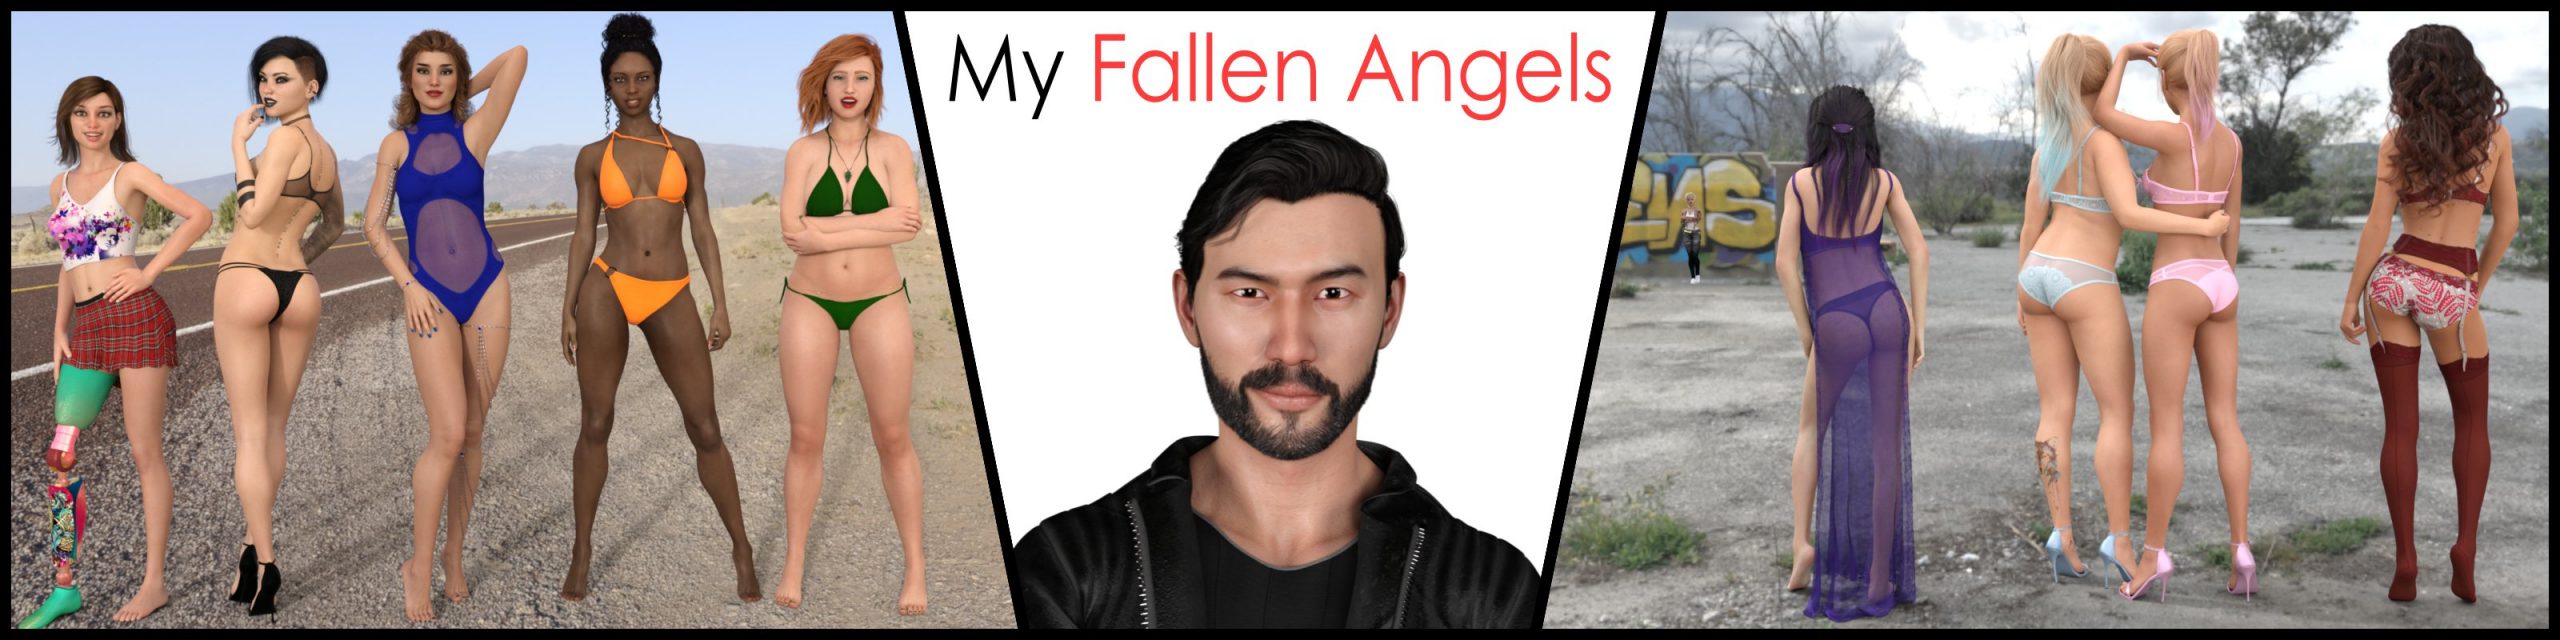 My Fallen Angels Bad Angel Games